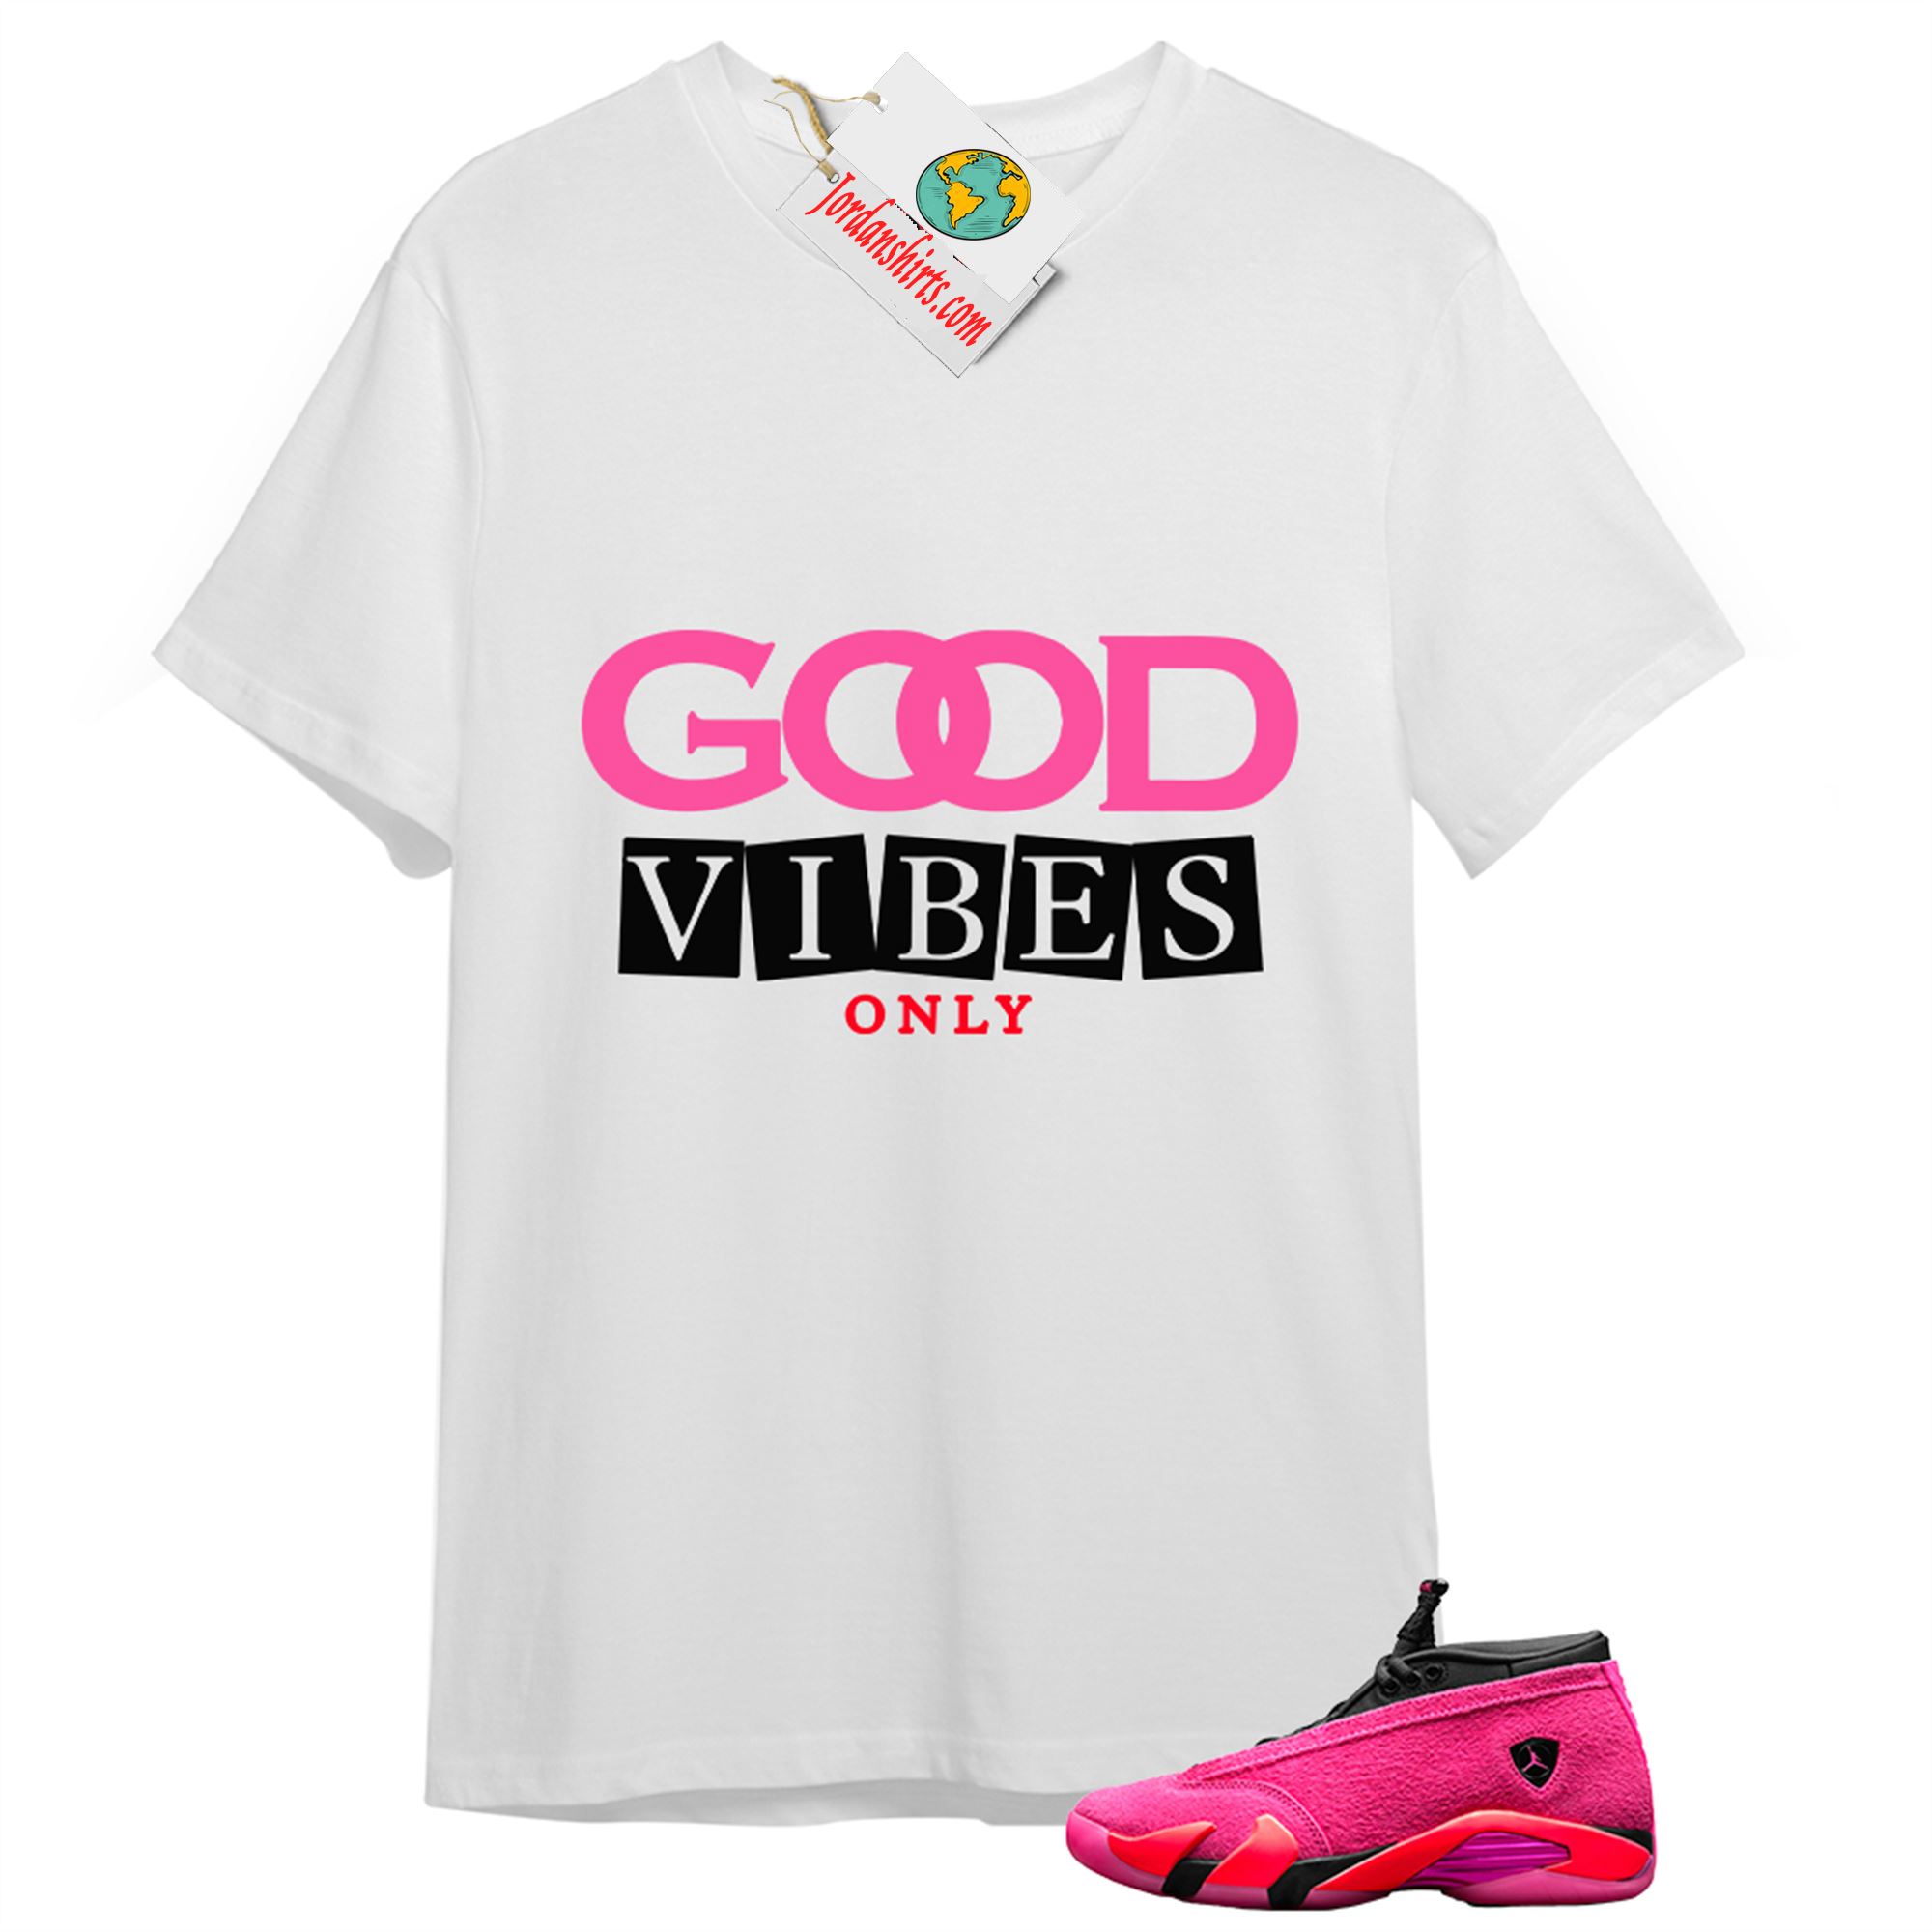 Jordan 14 Shirt, Good Vibes Only White T-shirt Air Jordan 14 Wmns Shocking Pink 14s Full Size Up To 5xl